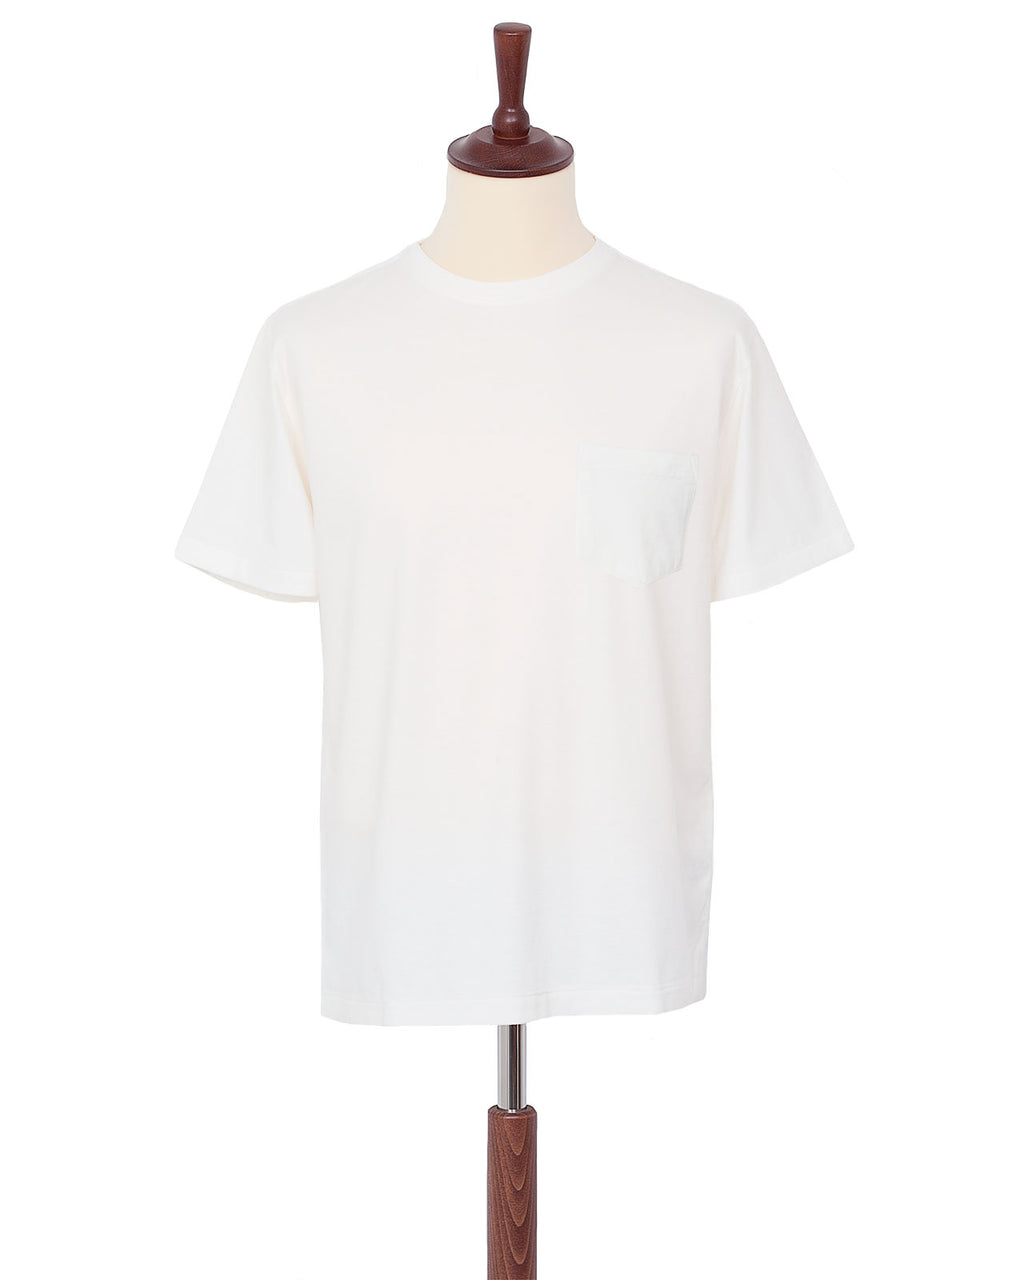 Glad Hand Standard Pocket T-Shirt, White